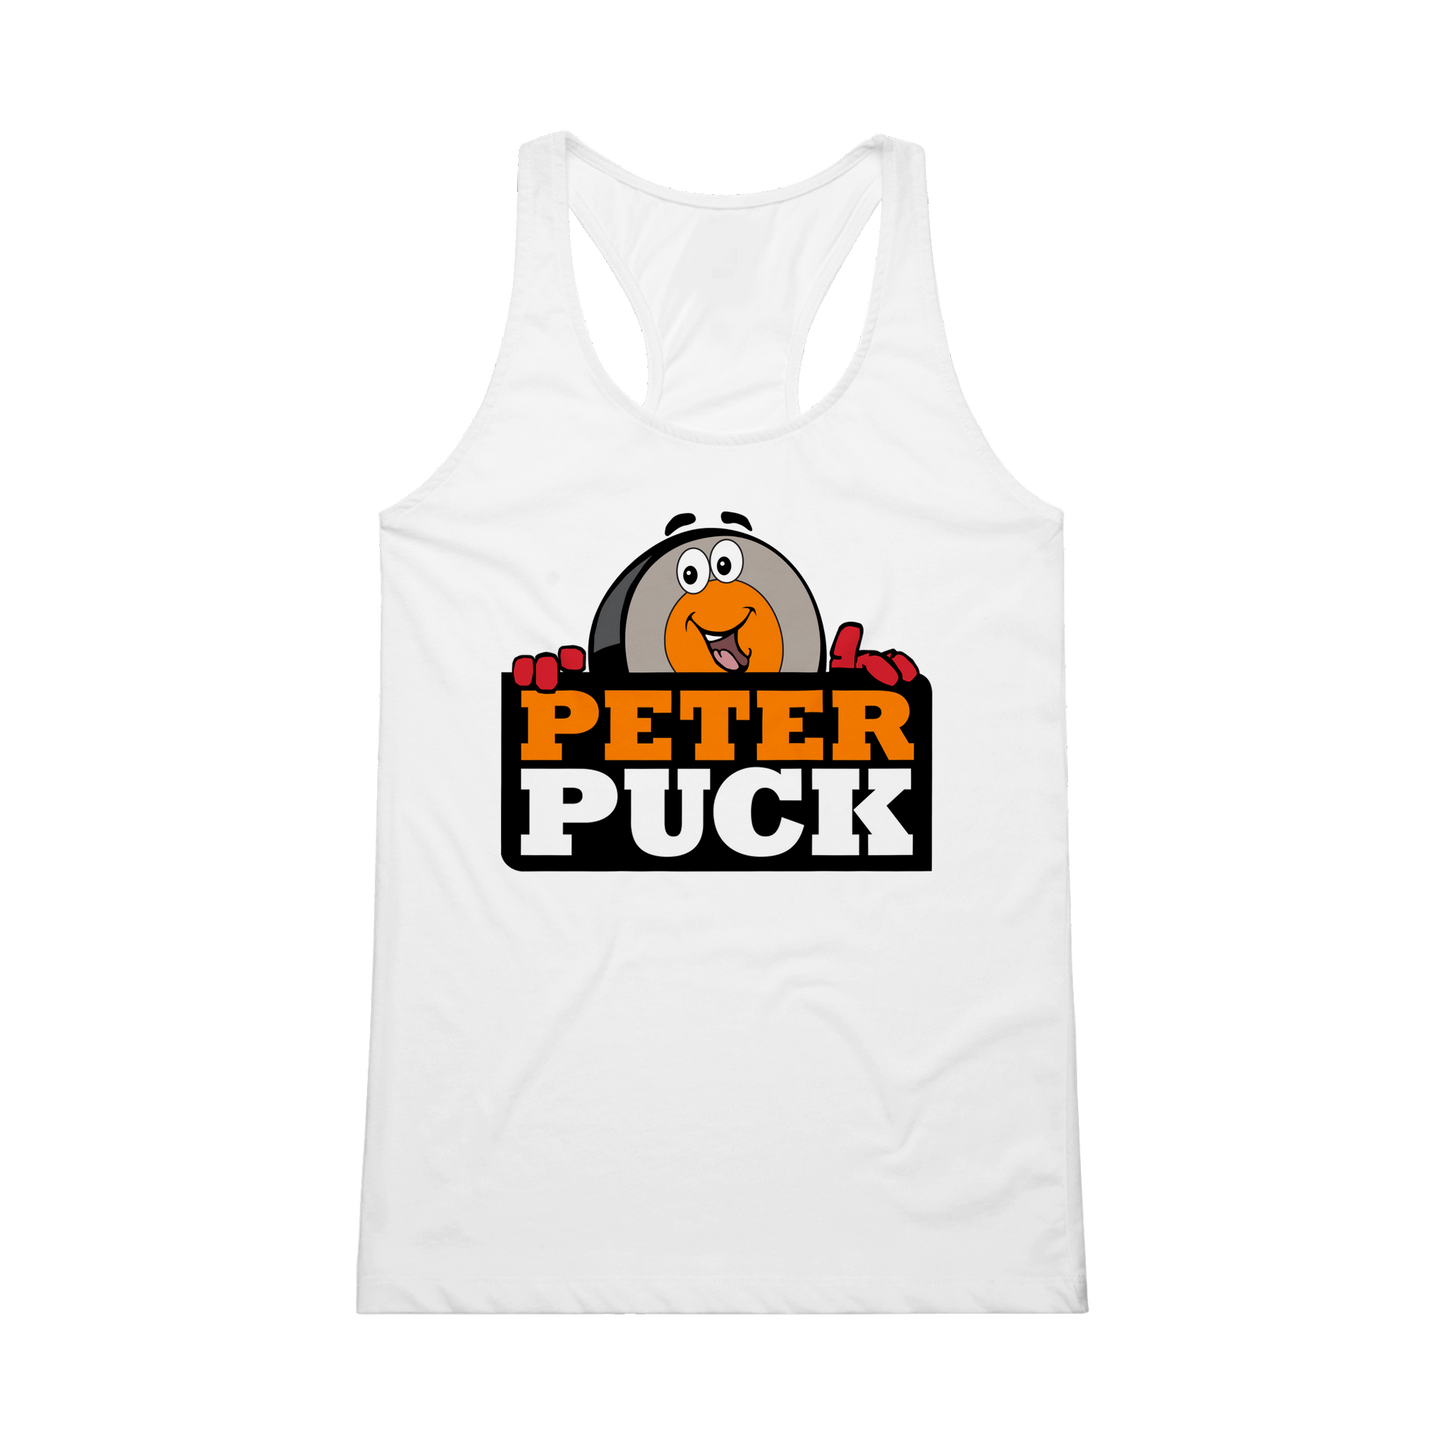 Peter Puck Peek Performance Women's Tank Top